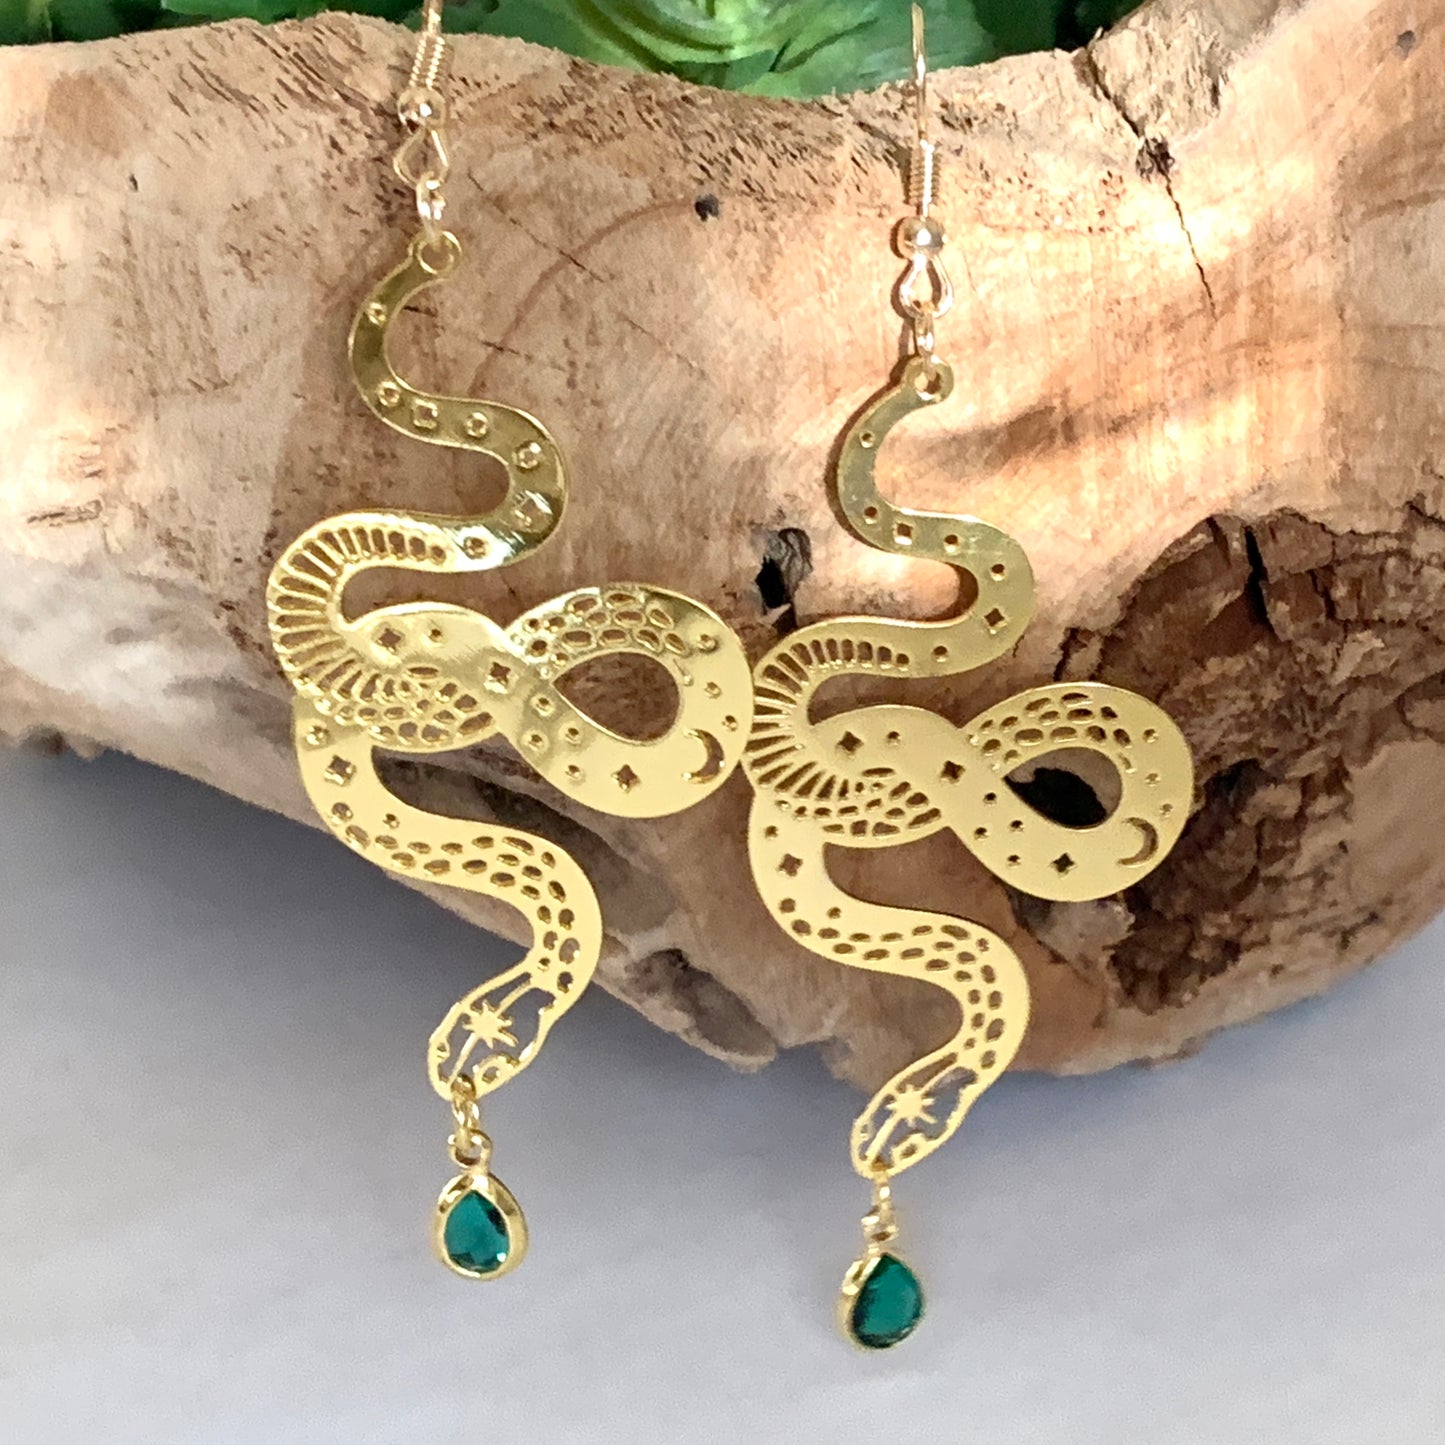 Cosmic Snake with Green Crystal Golden Earrings